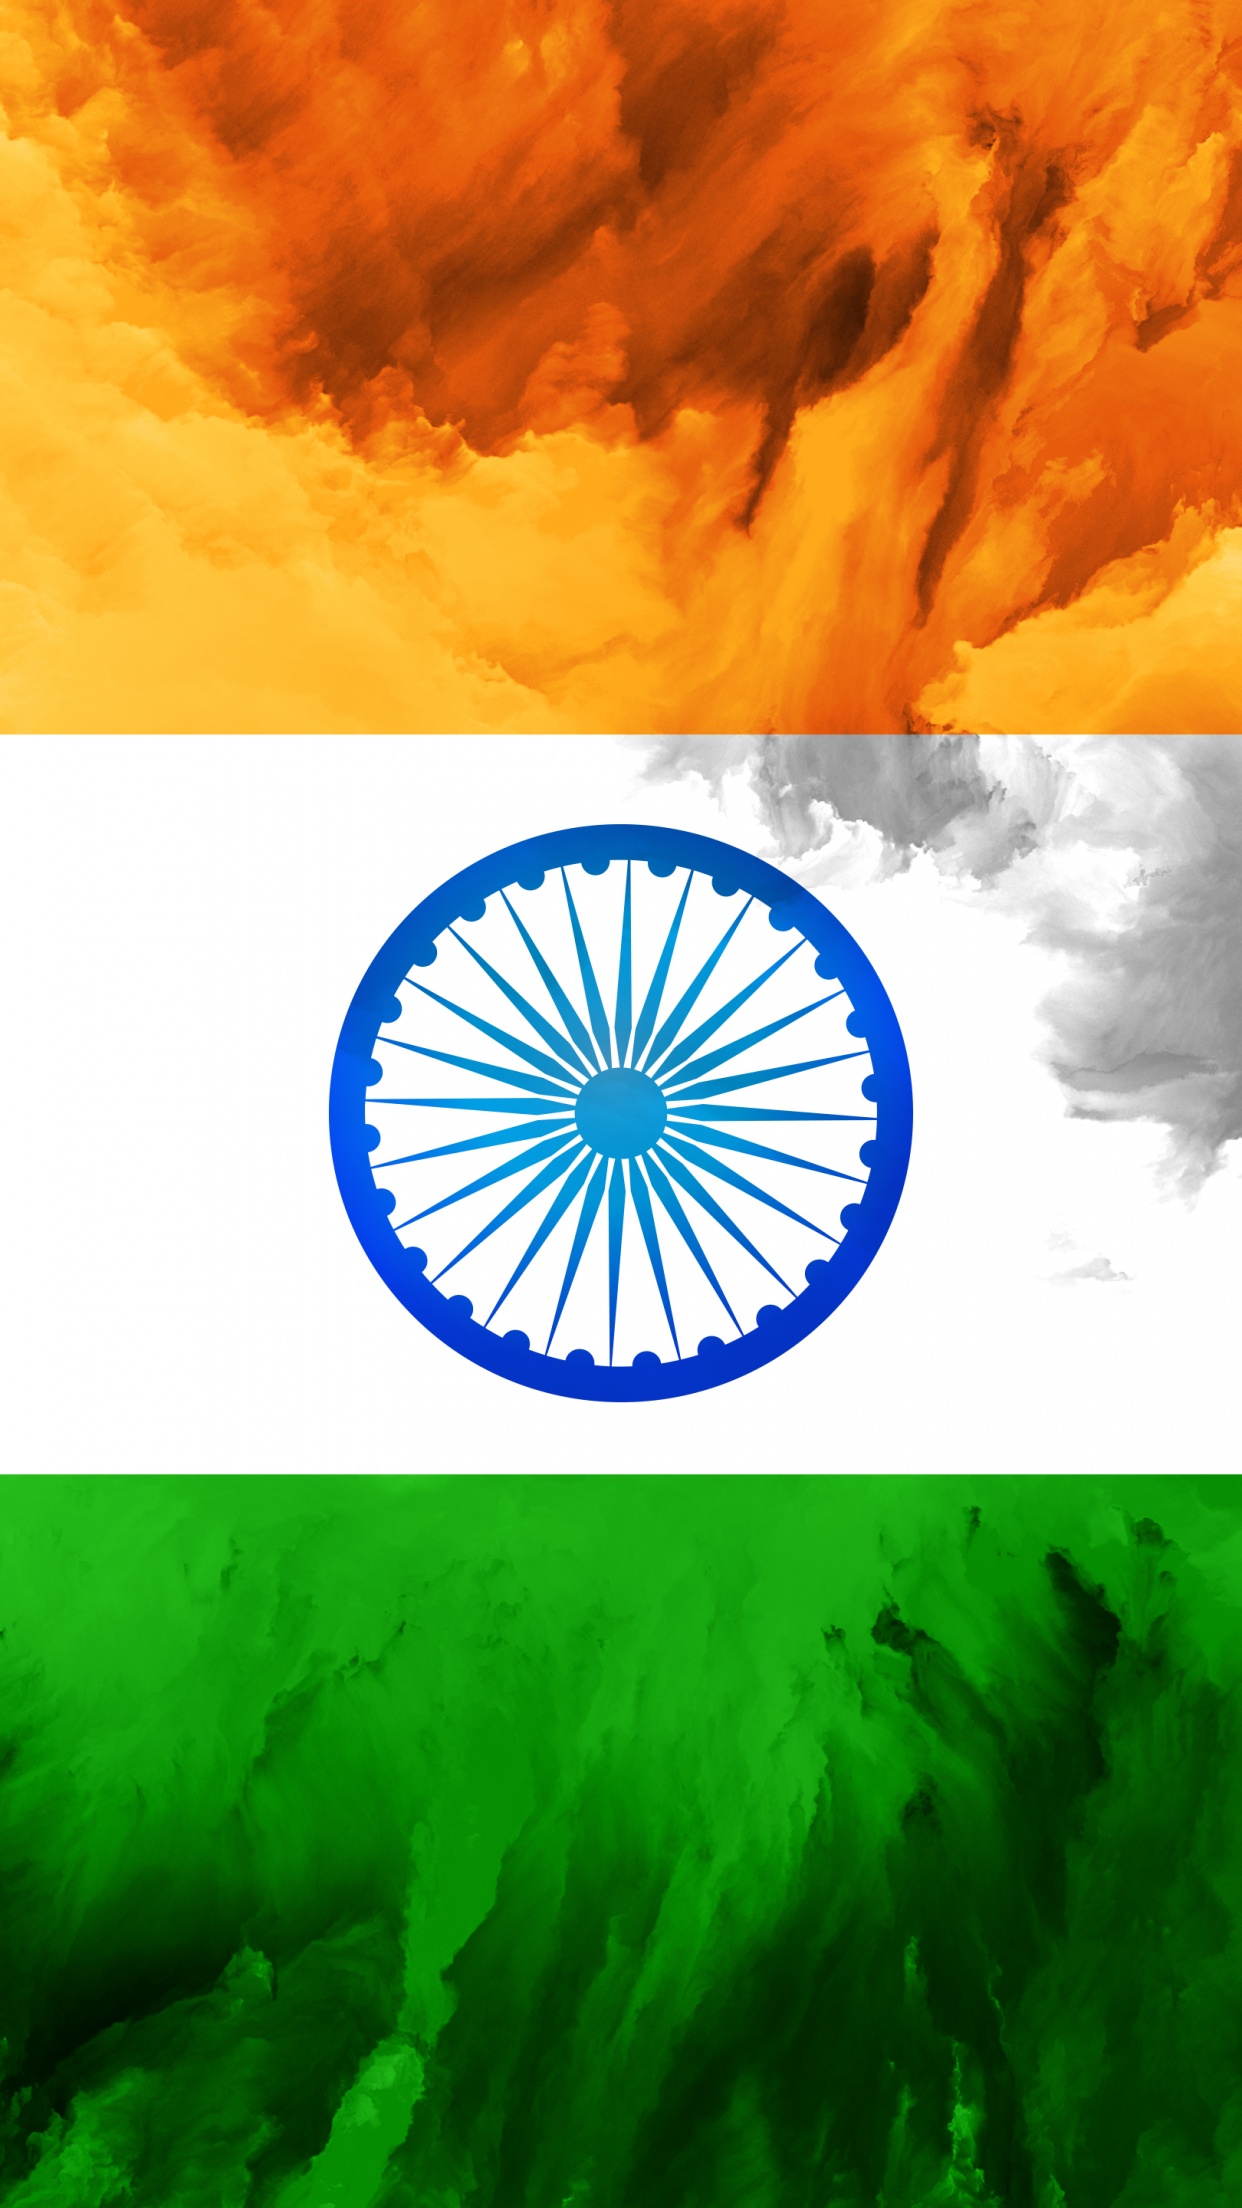 Indian Flag Wallpaper 4K, Tricolour Flag, National flag, Flag of India